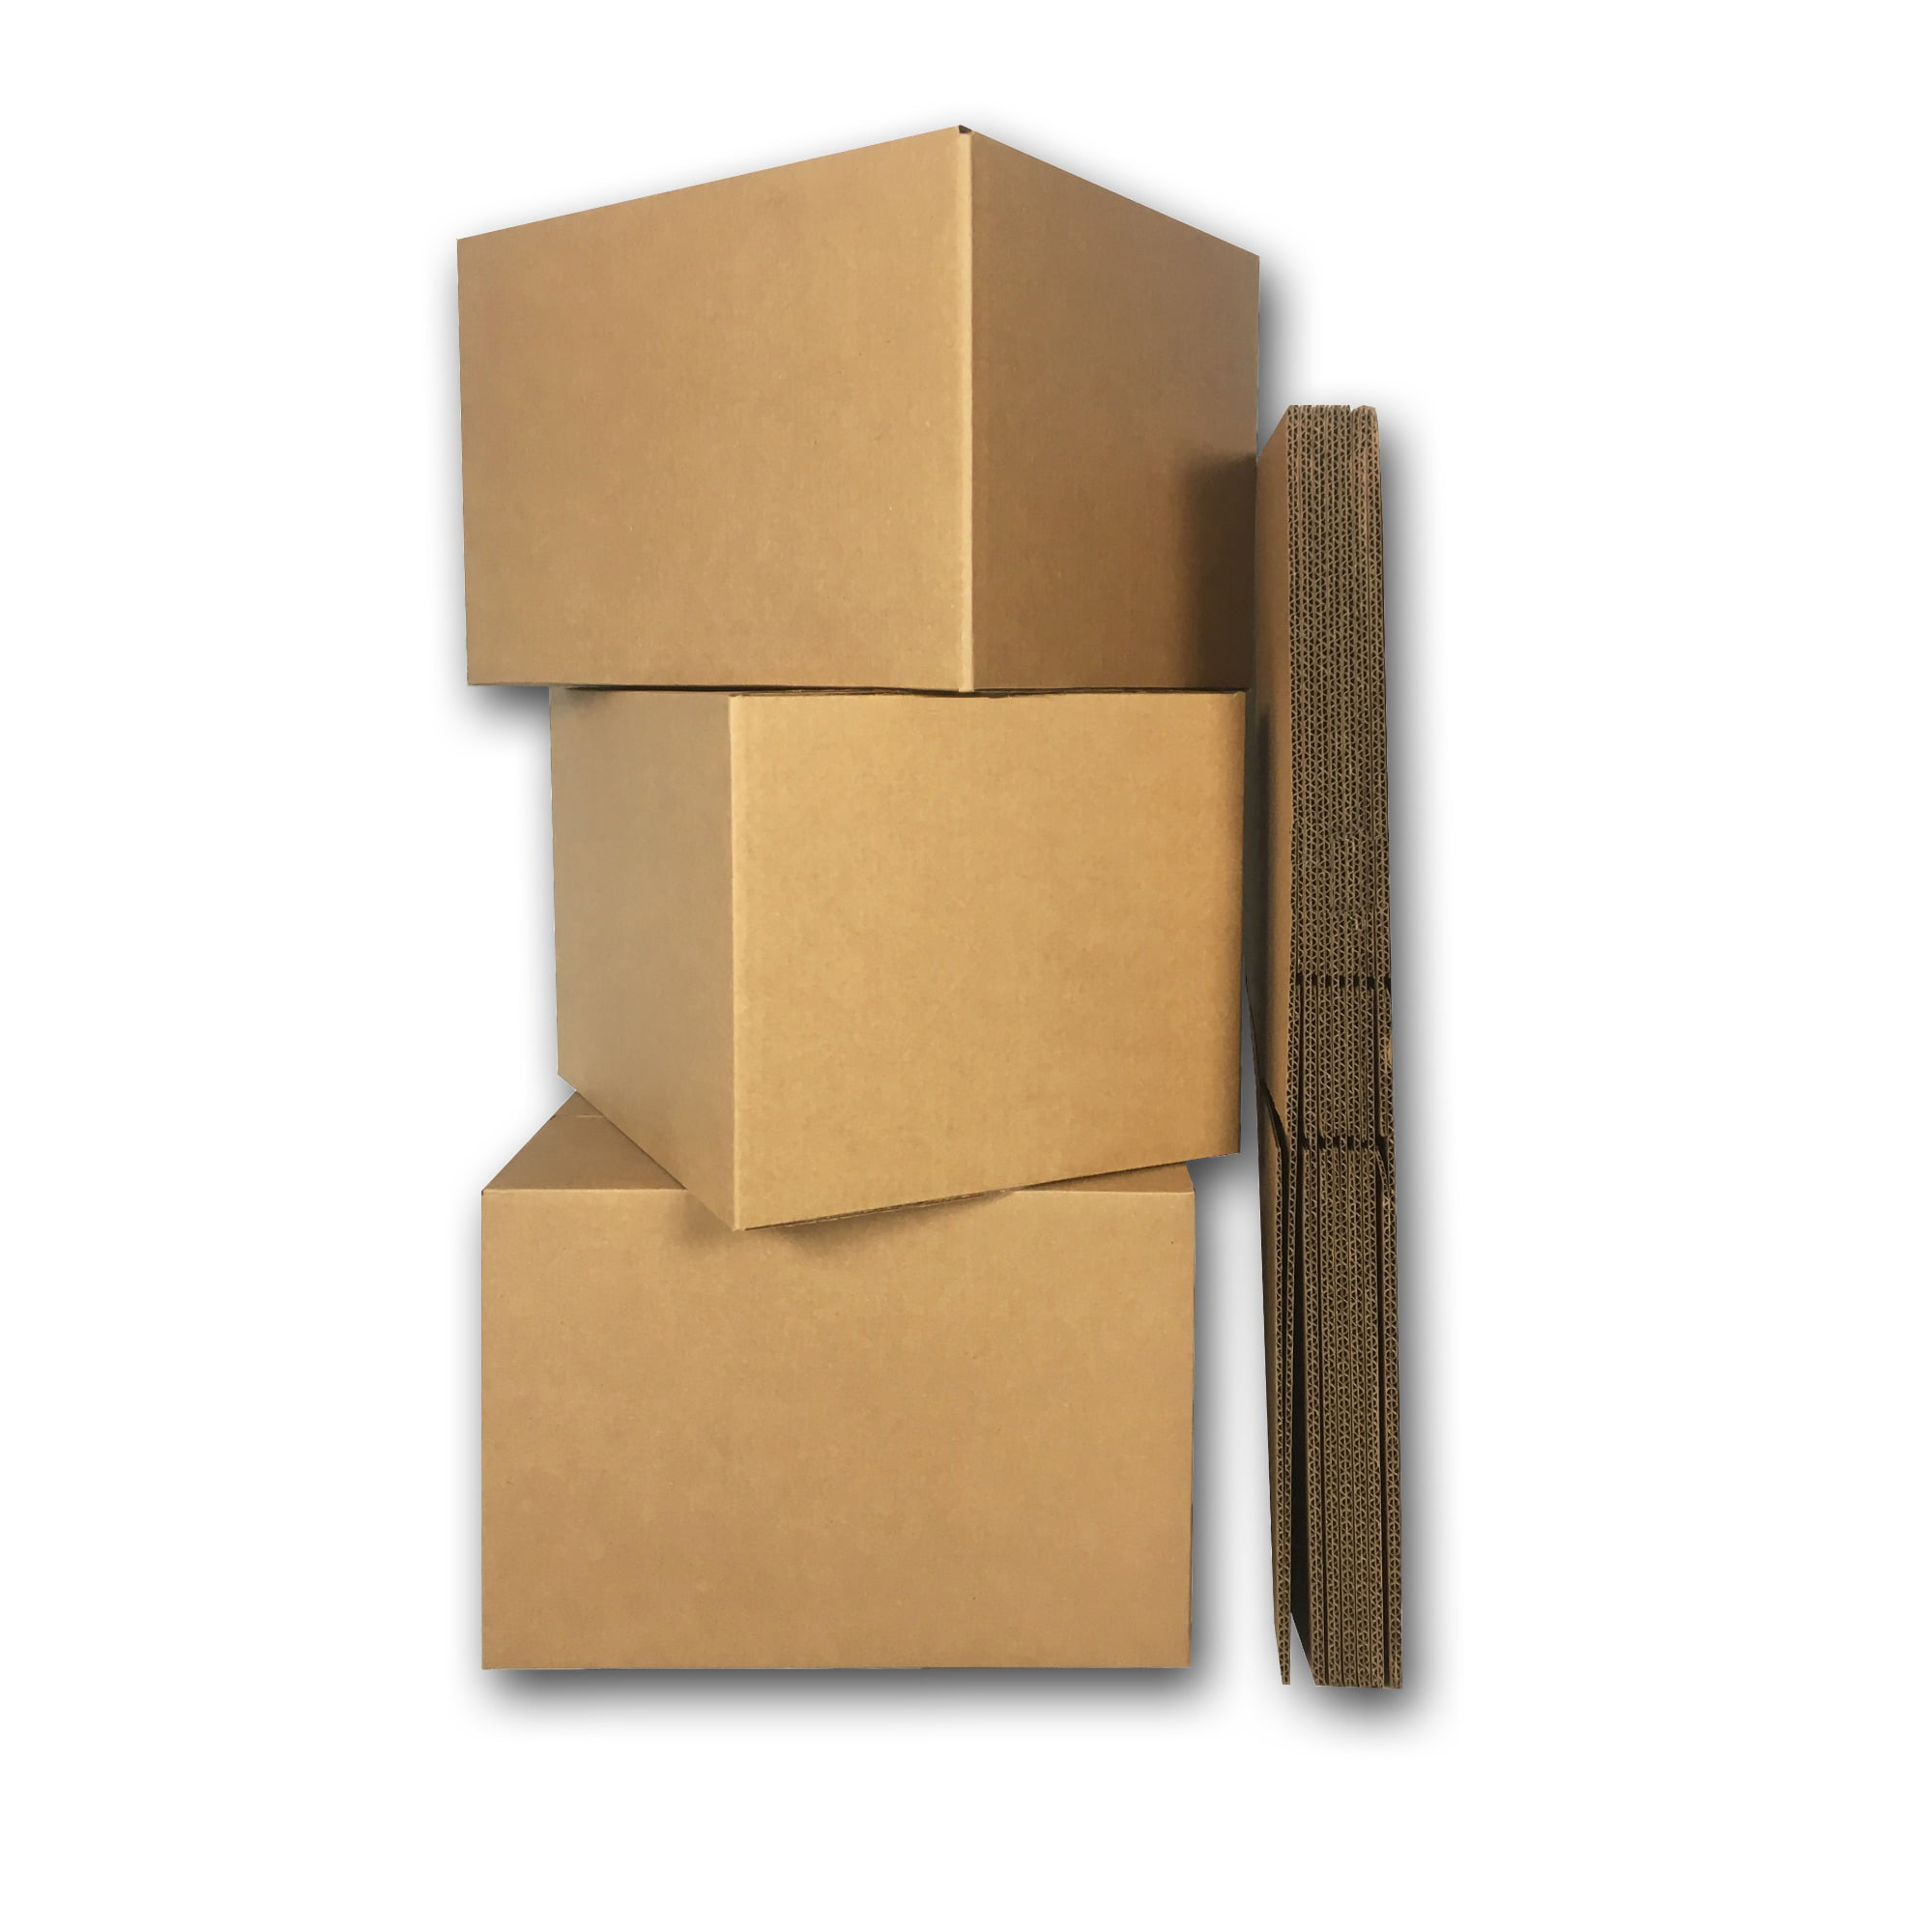 Package 14. Коробки складные картонные. Короб картонный складной. Коробки складные для перевозки вещей. Картон складной.